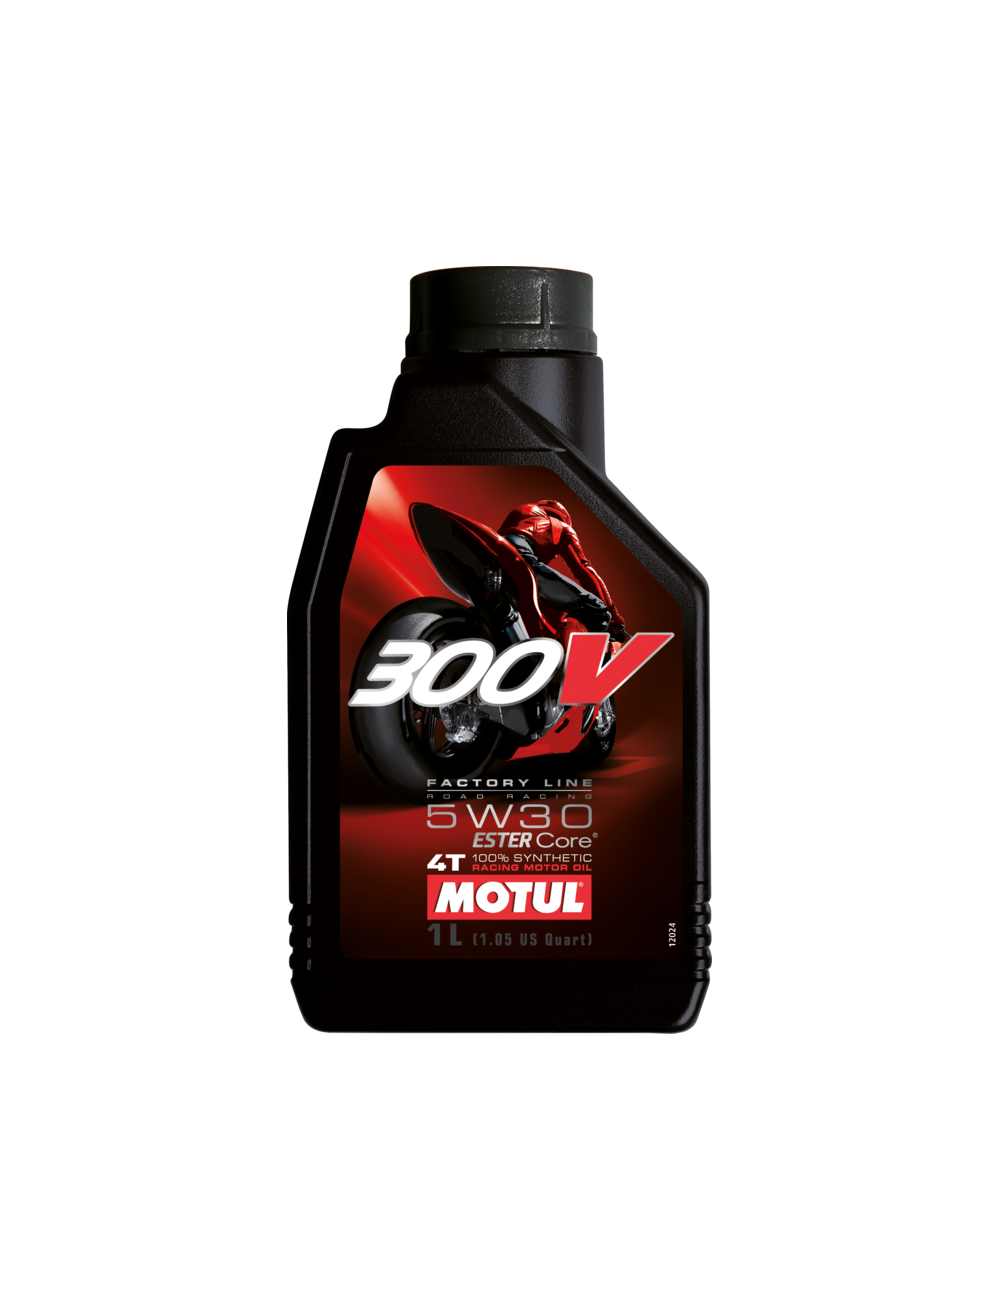 Motul 300V Factory Line Road Racing 5W30